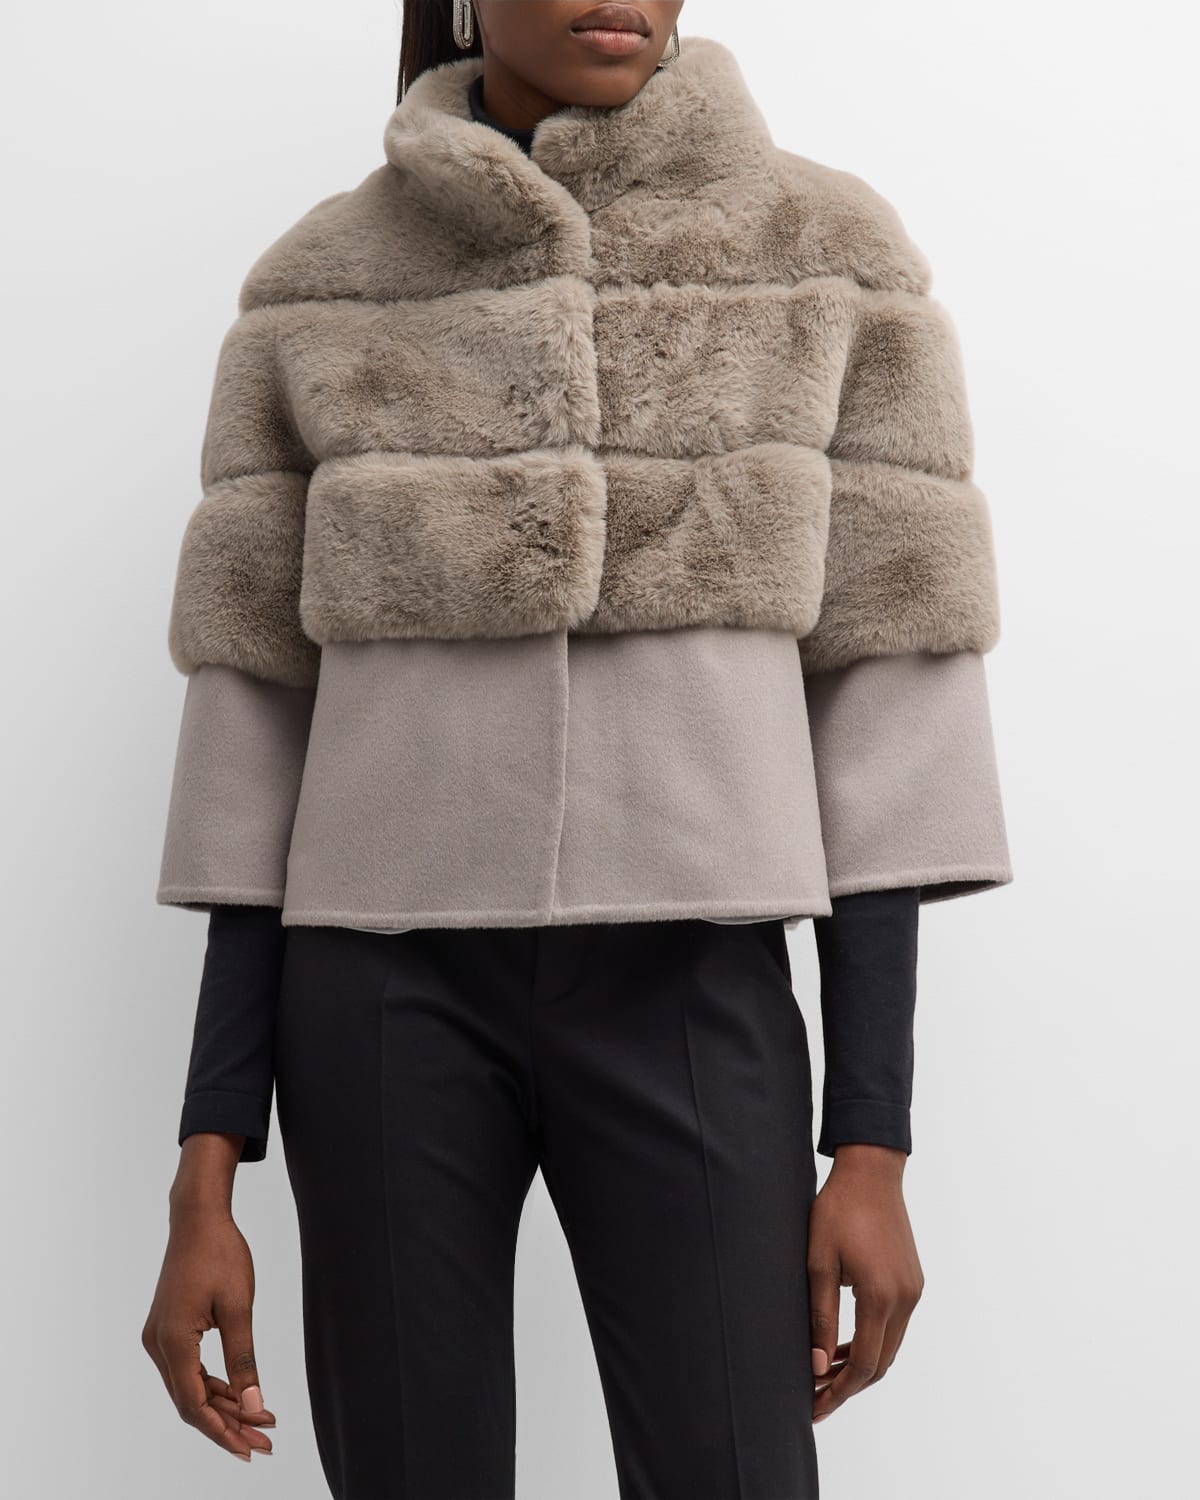 Sheard Faux Fur & Cashmere Jacket